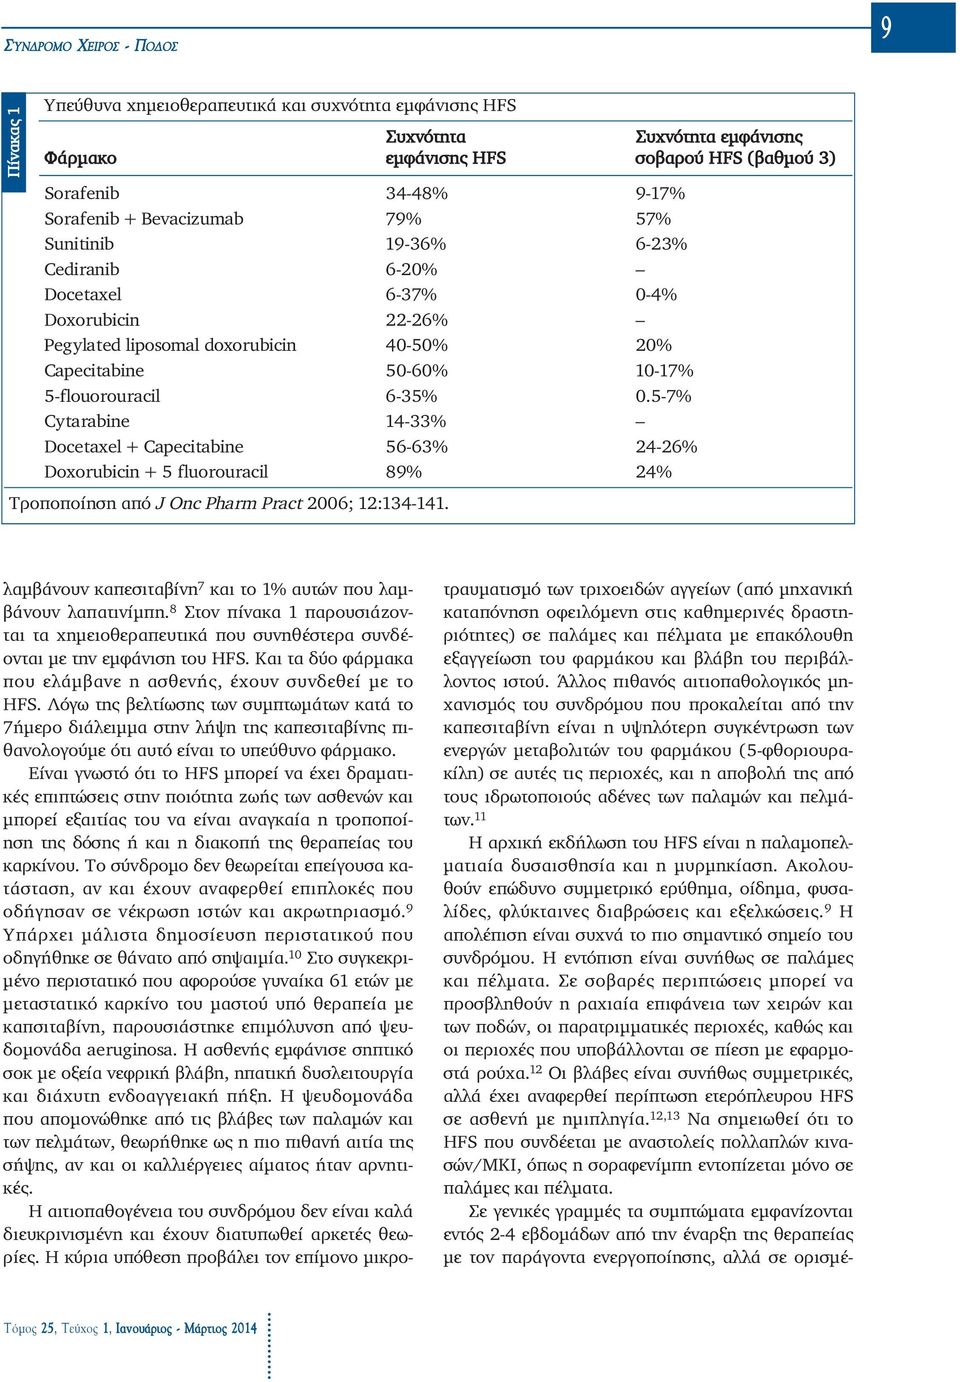 6-35% 0.5-7% Cytarabine 14-33% Docetaxel + Capecitabine 56-63% 24-26% Doxorubicin + 5 fluorouracil 89% 24% Tροποποίηση από J Onc Pharm Pract 2006; 12:134-141.